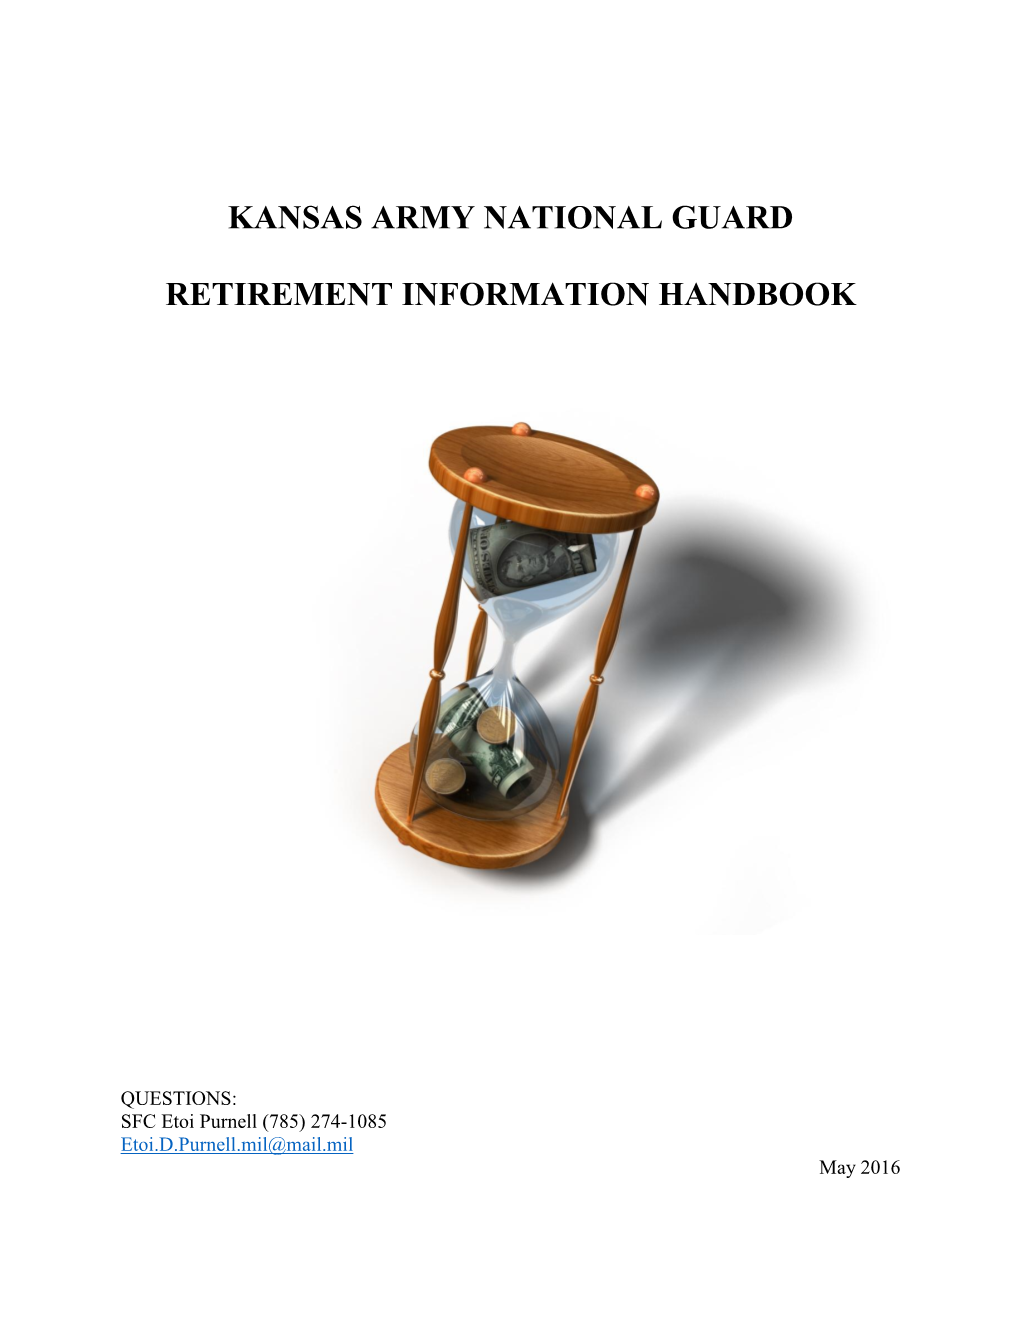 Kansas Army National Guard Retirement Information